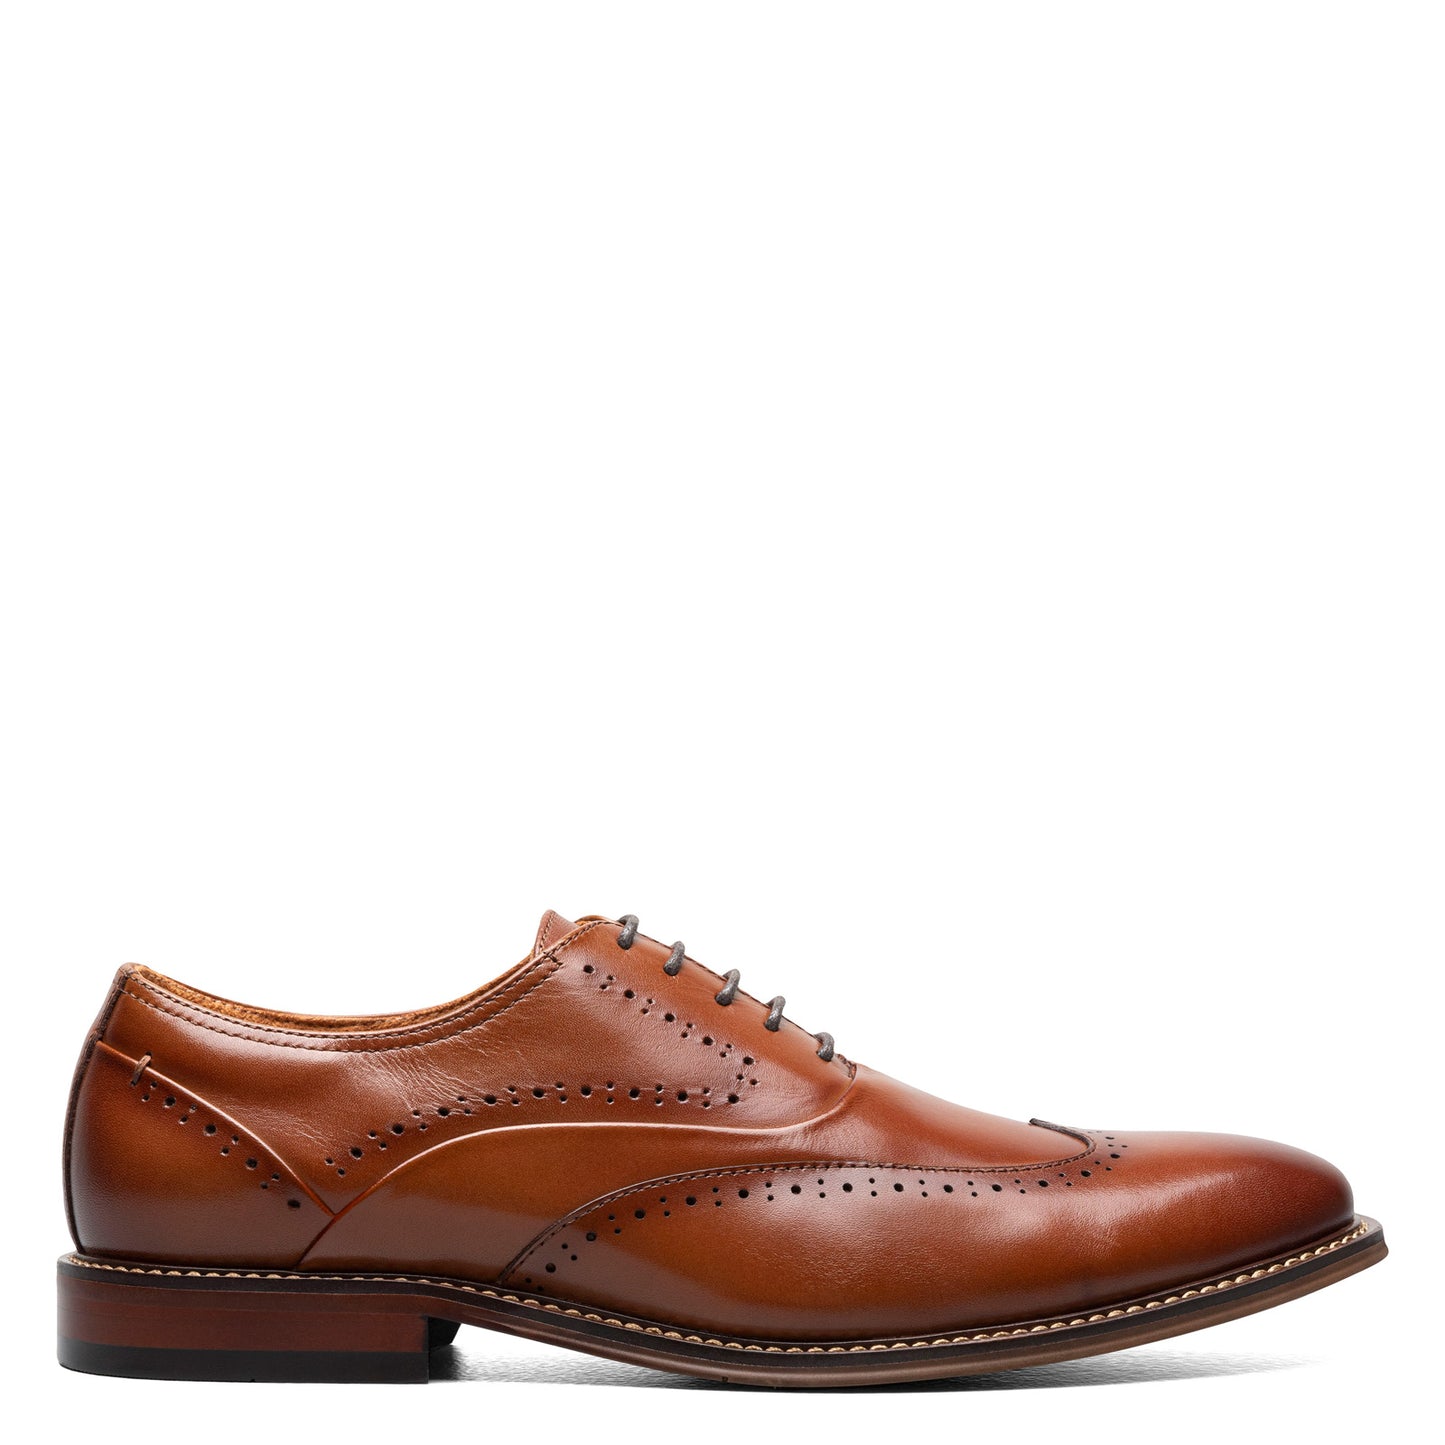 Peltz Shoes  Men's Stacy Adams Macarthur Wingtip Oxford COGNAC 25489-221